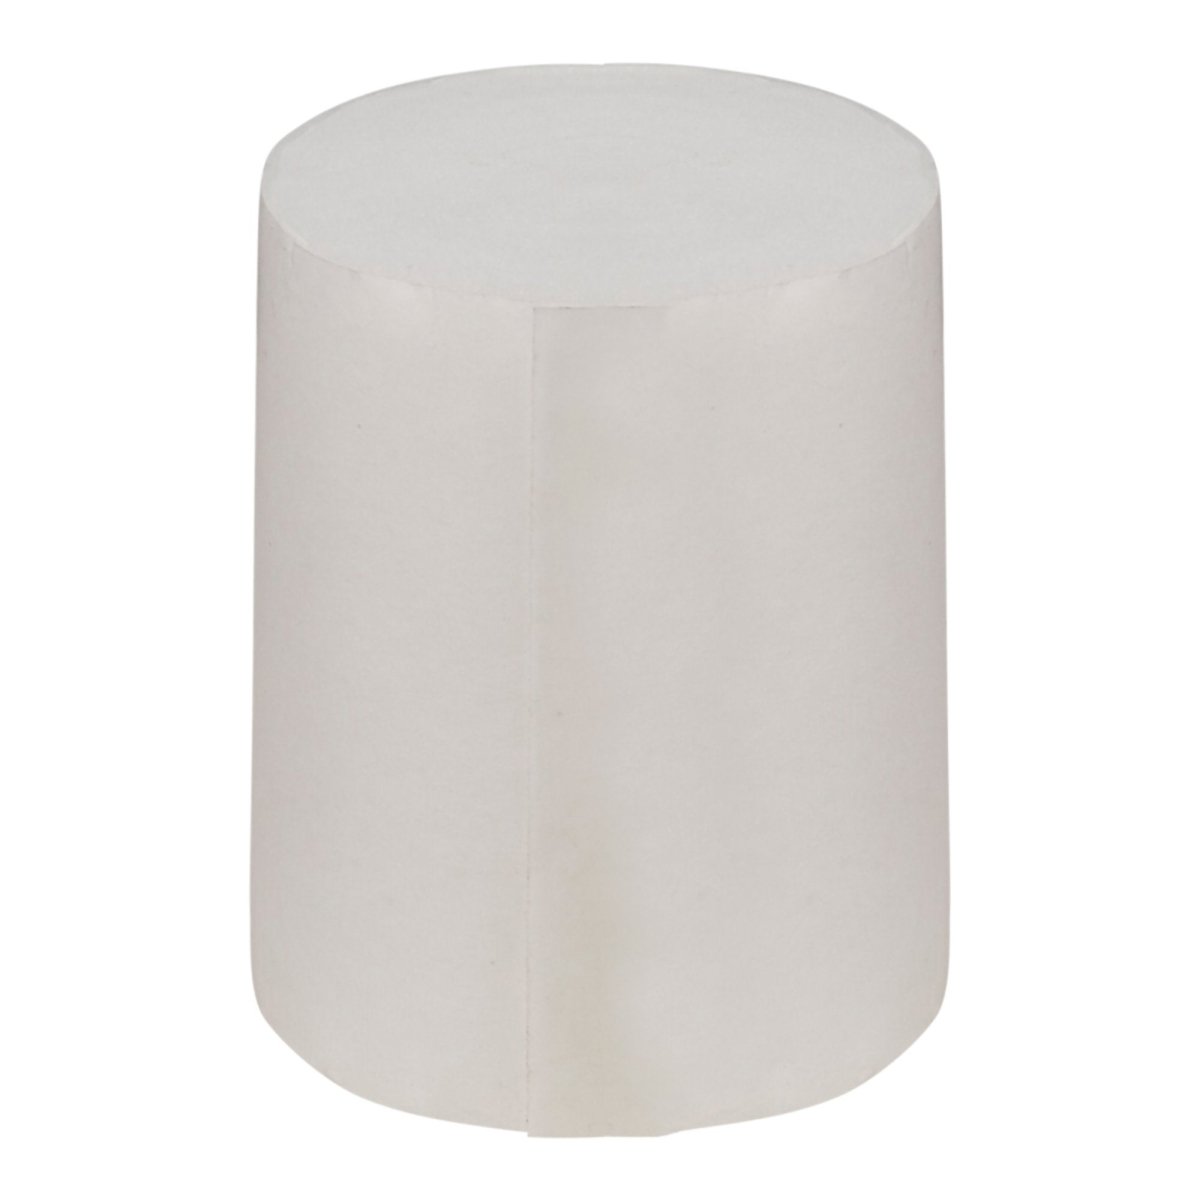 3M Synthetic White Polyester Undercast Cast Padding - 374554_BG - 1